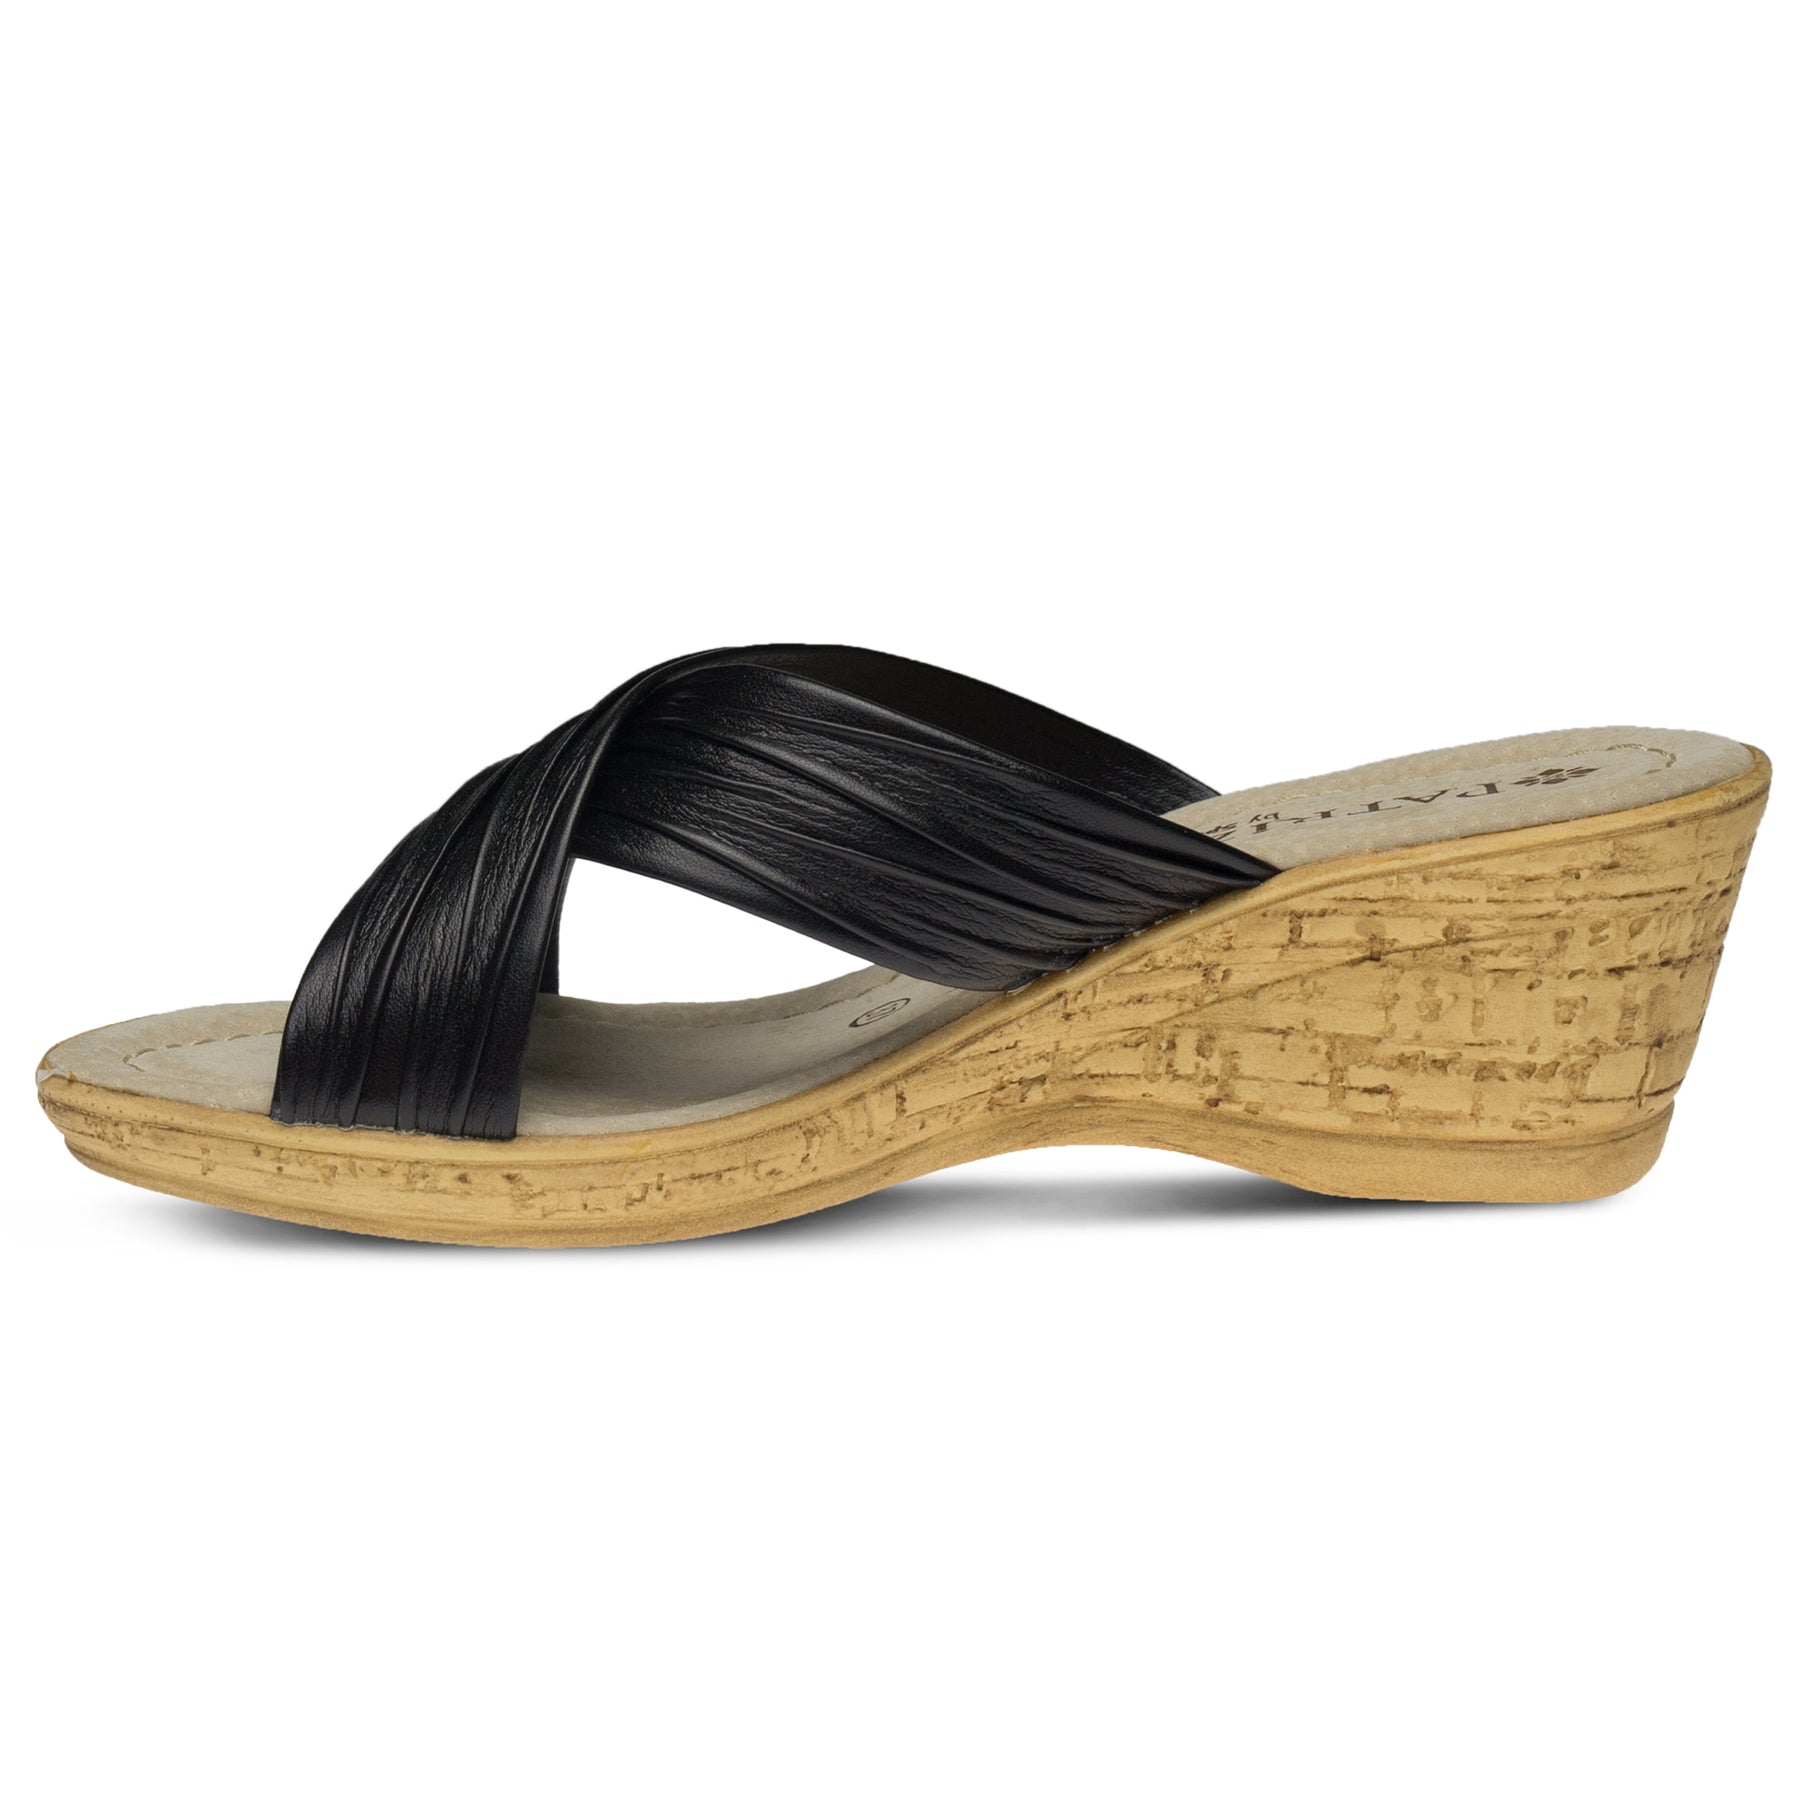 BRONZE MARGE SLIDE SANDAL by PATRIZIA – Spring Step Shoes